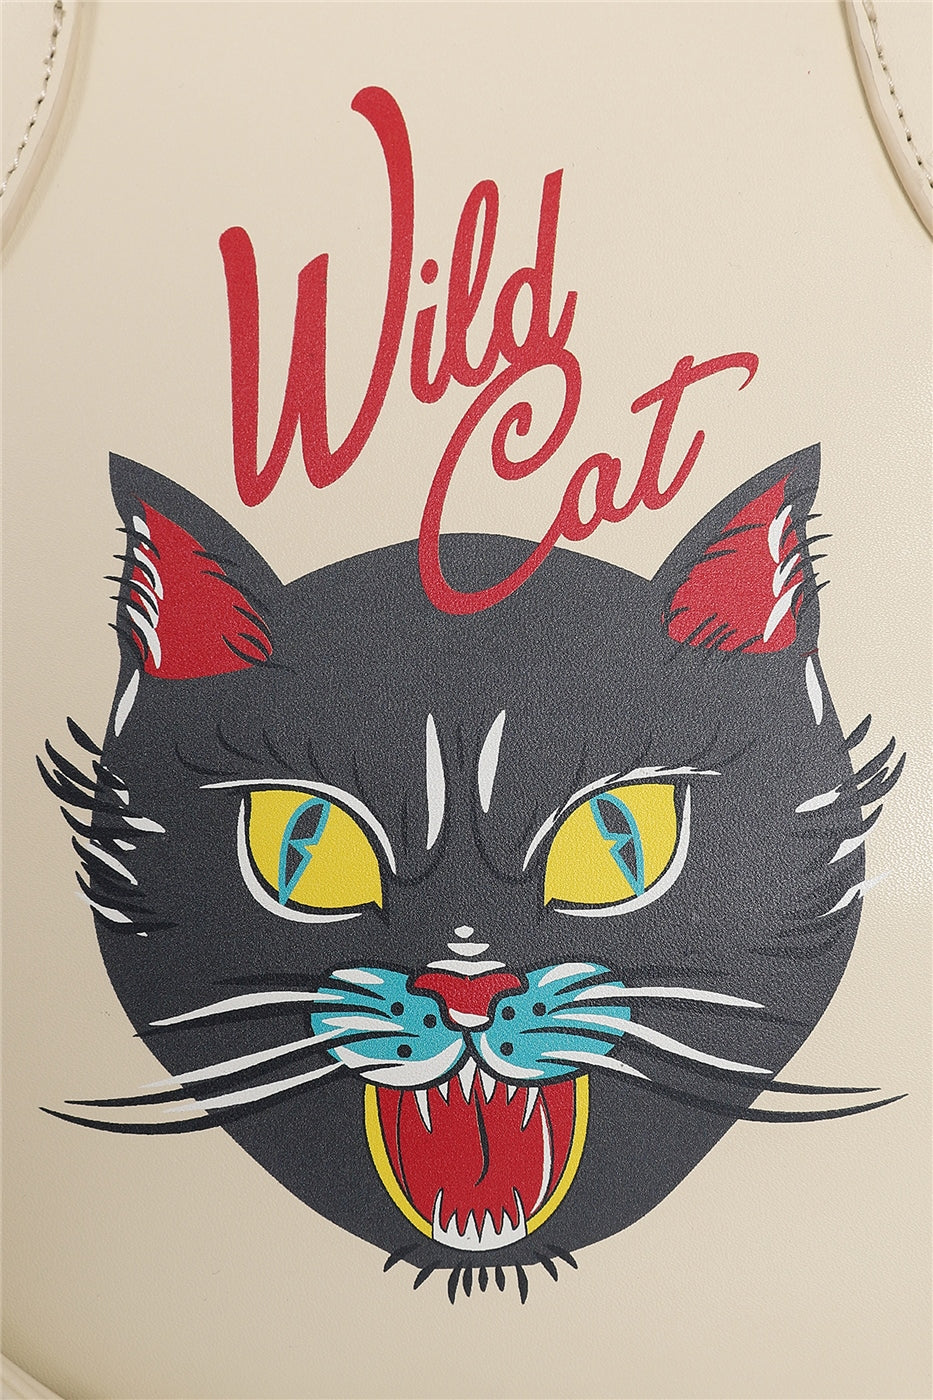 Kyra Wild Cat Bag by Lulu Hun